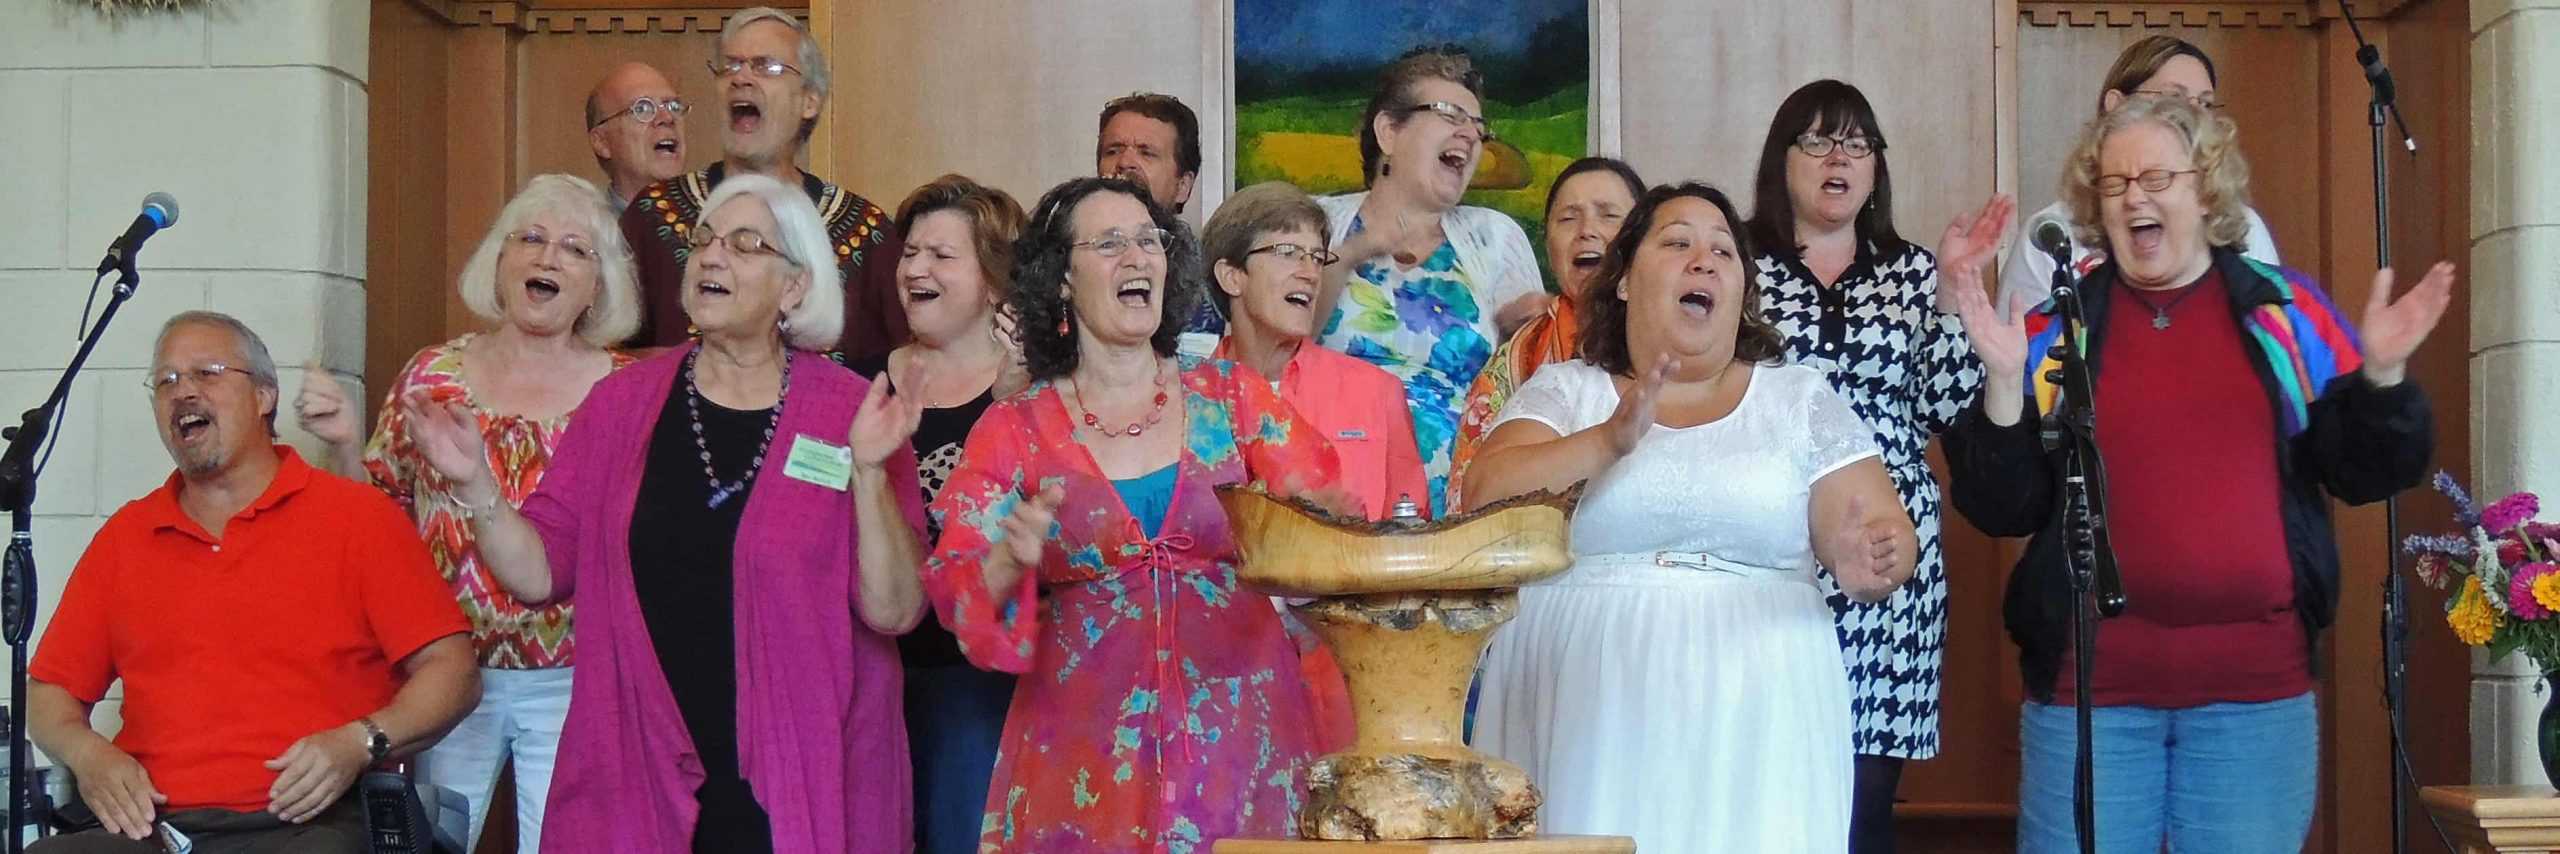 Photo of the UUCV choir singing enthusiastically